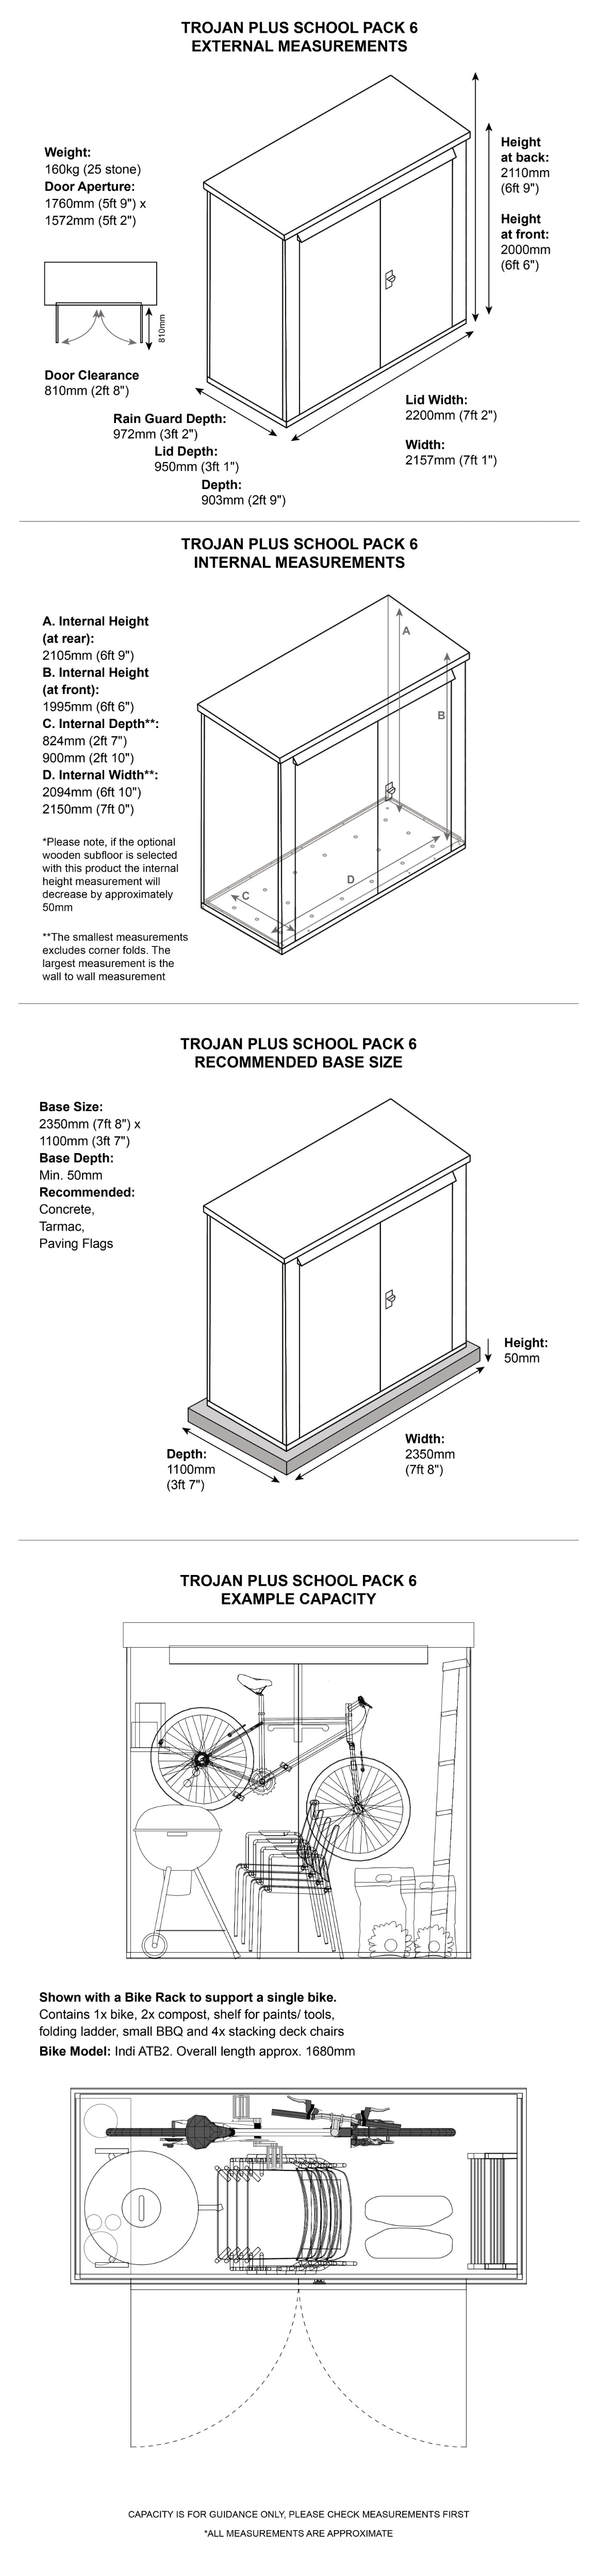 Trojan Plus - School Pack 6 - Dimensions